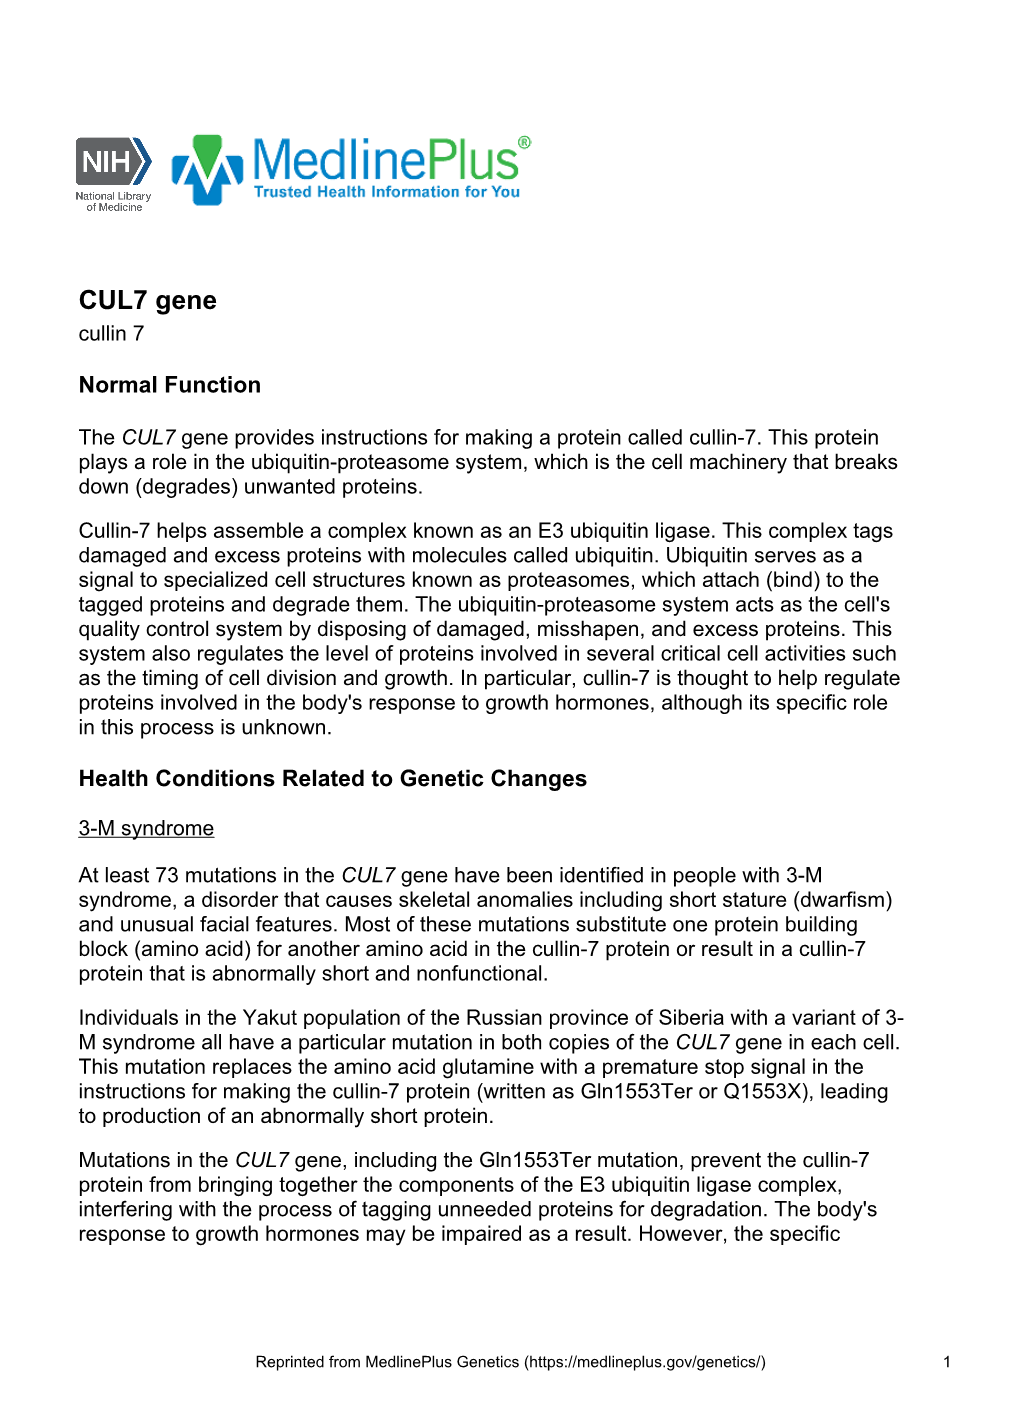 CUL7 Gene Cullin 7